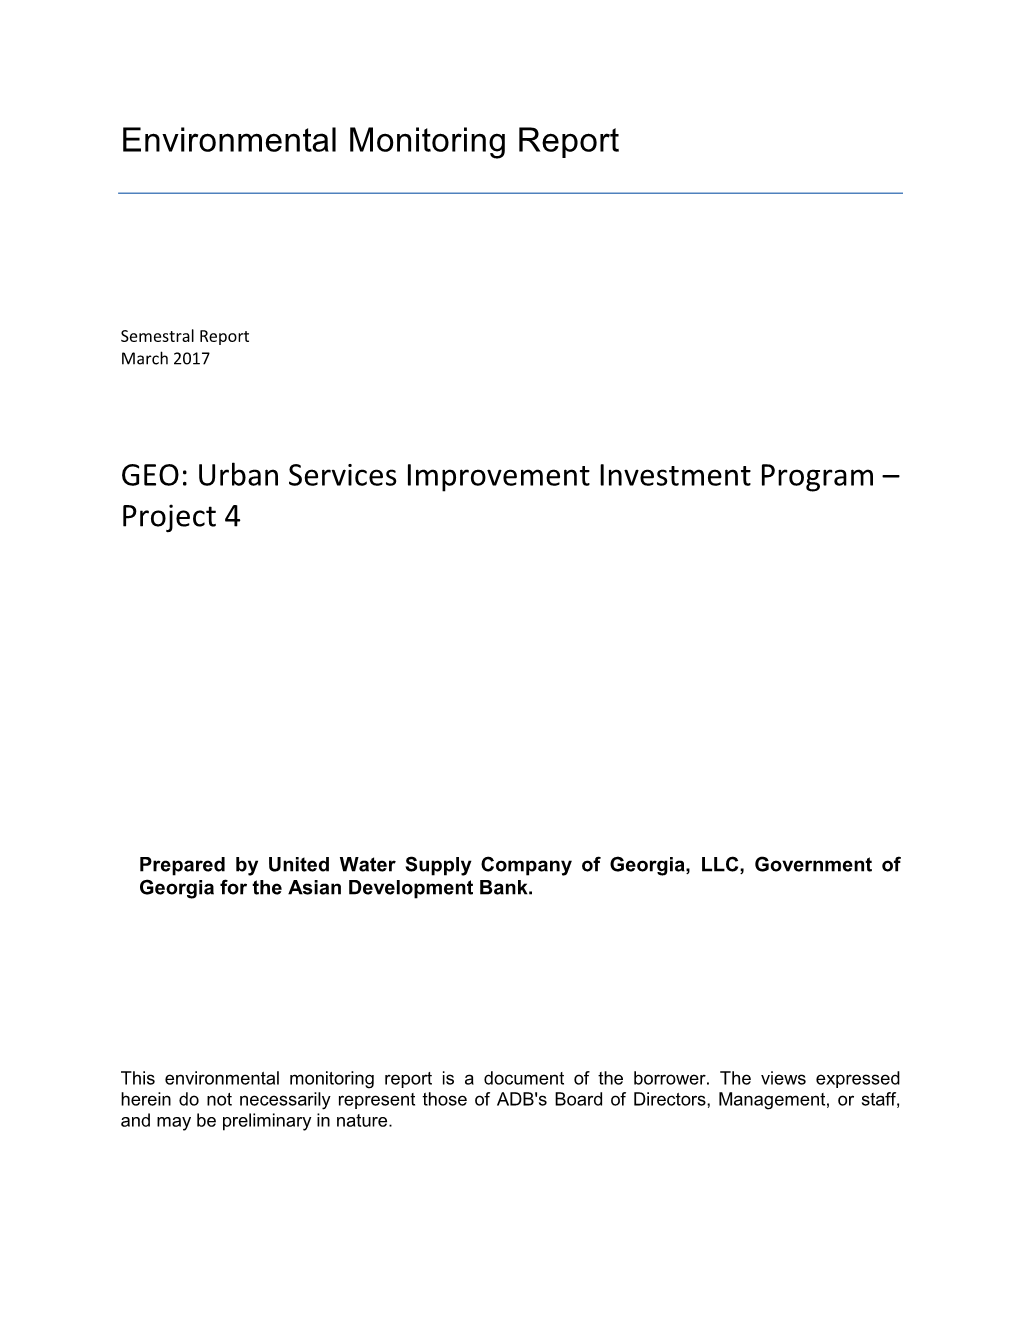 43405-026: Urban Services Improvement Investment Program